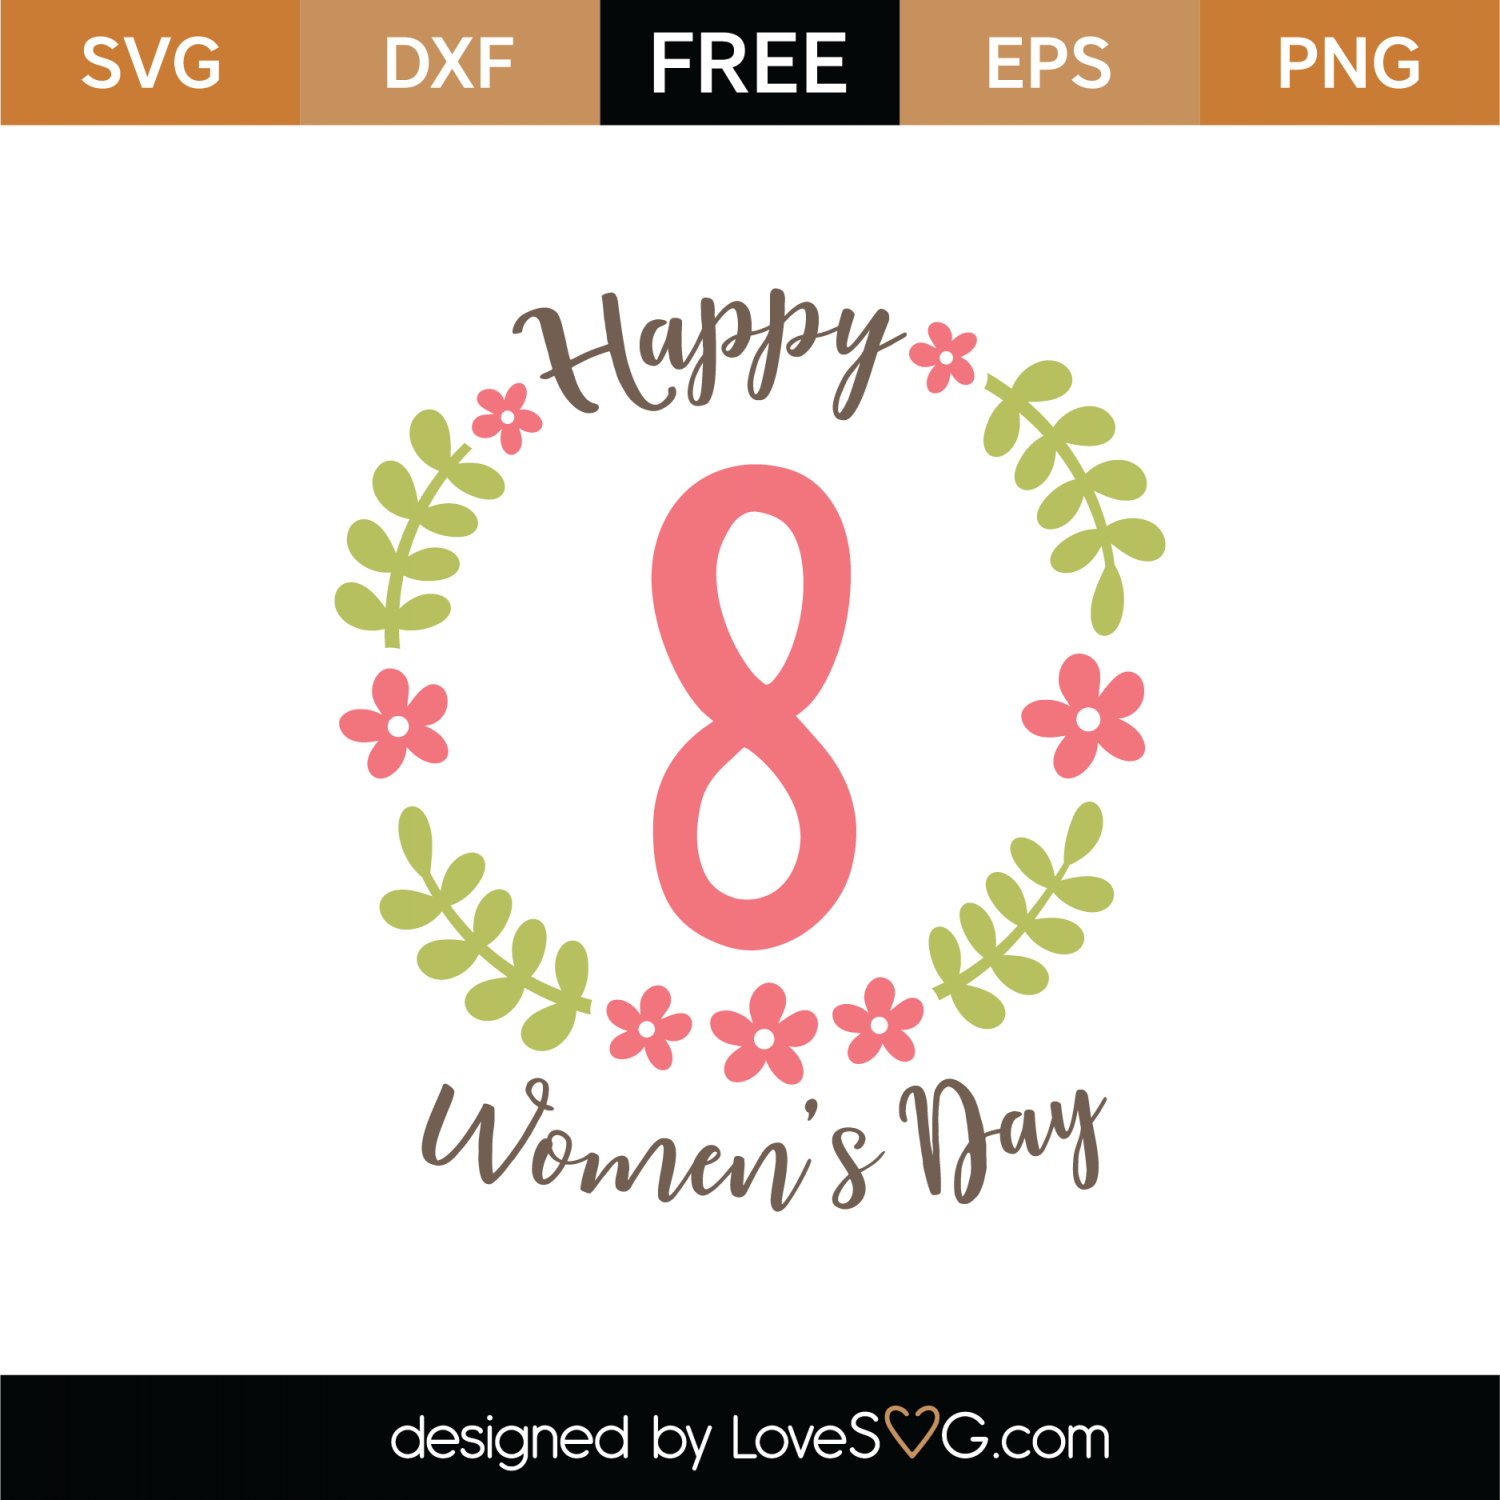 Download Free Happy Women's Day SVG Cut File | Lovesvg.com